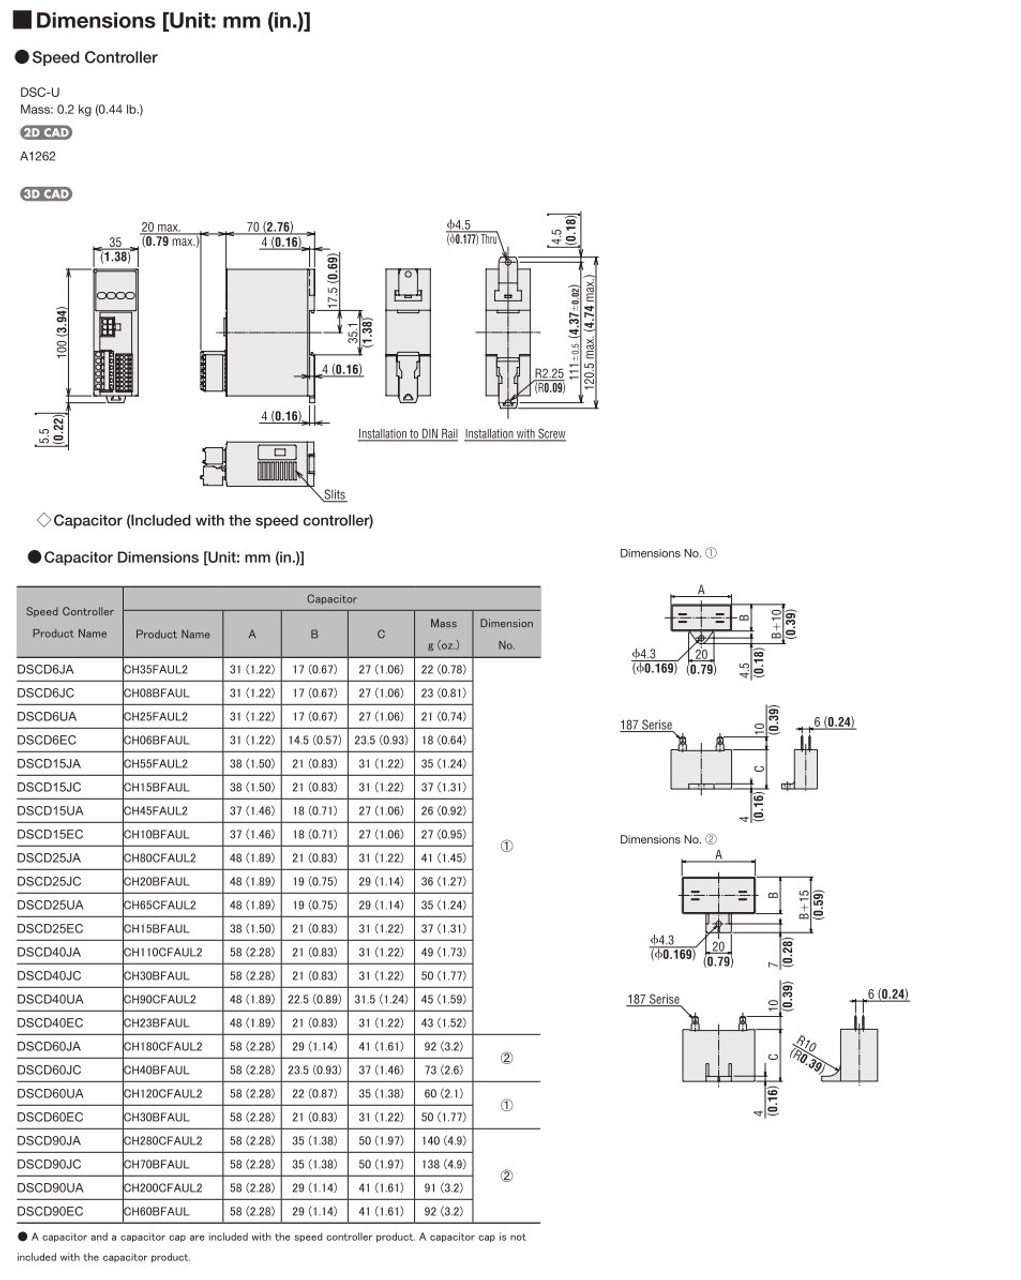 SCM315UA-250A / DSCD15UA - Dimensions